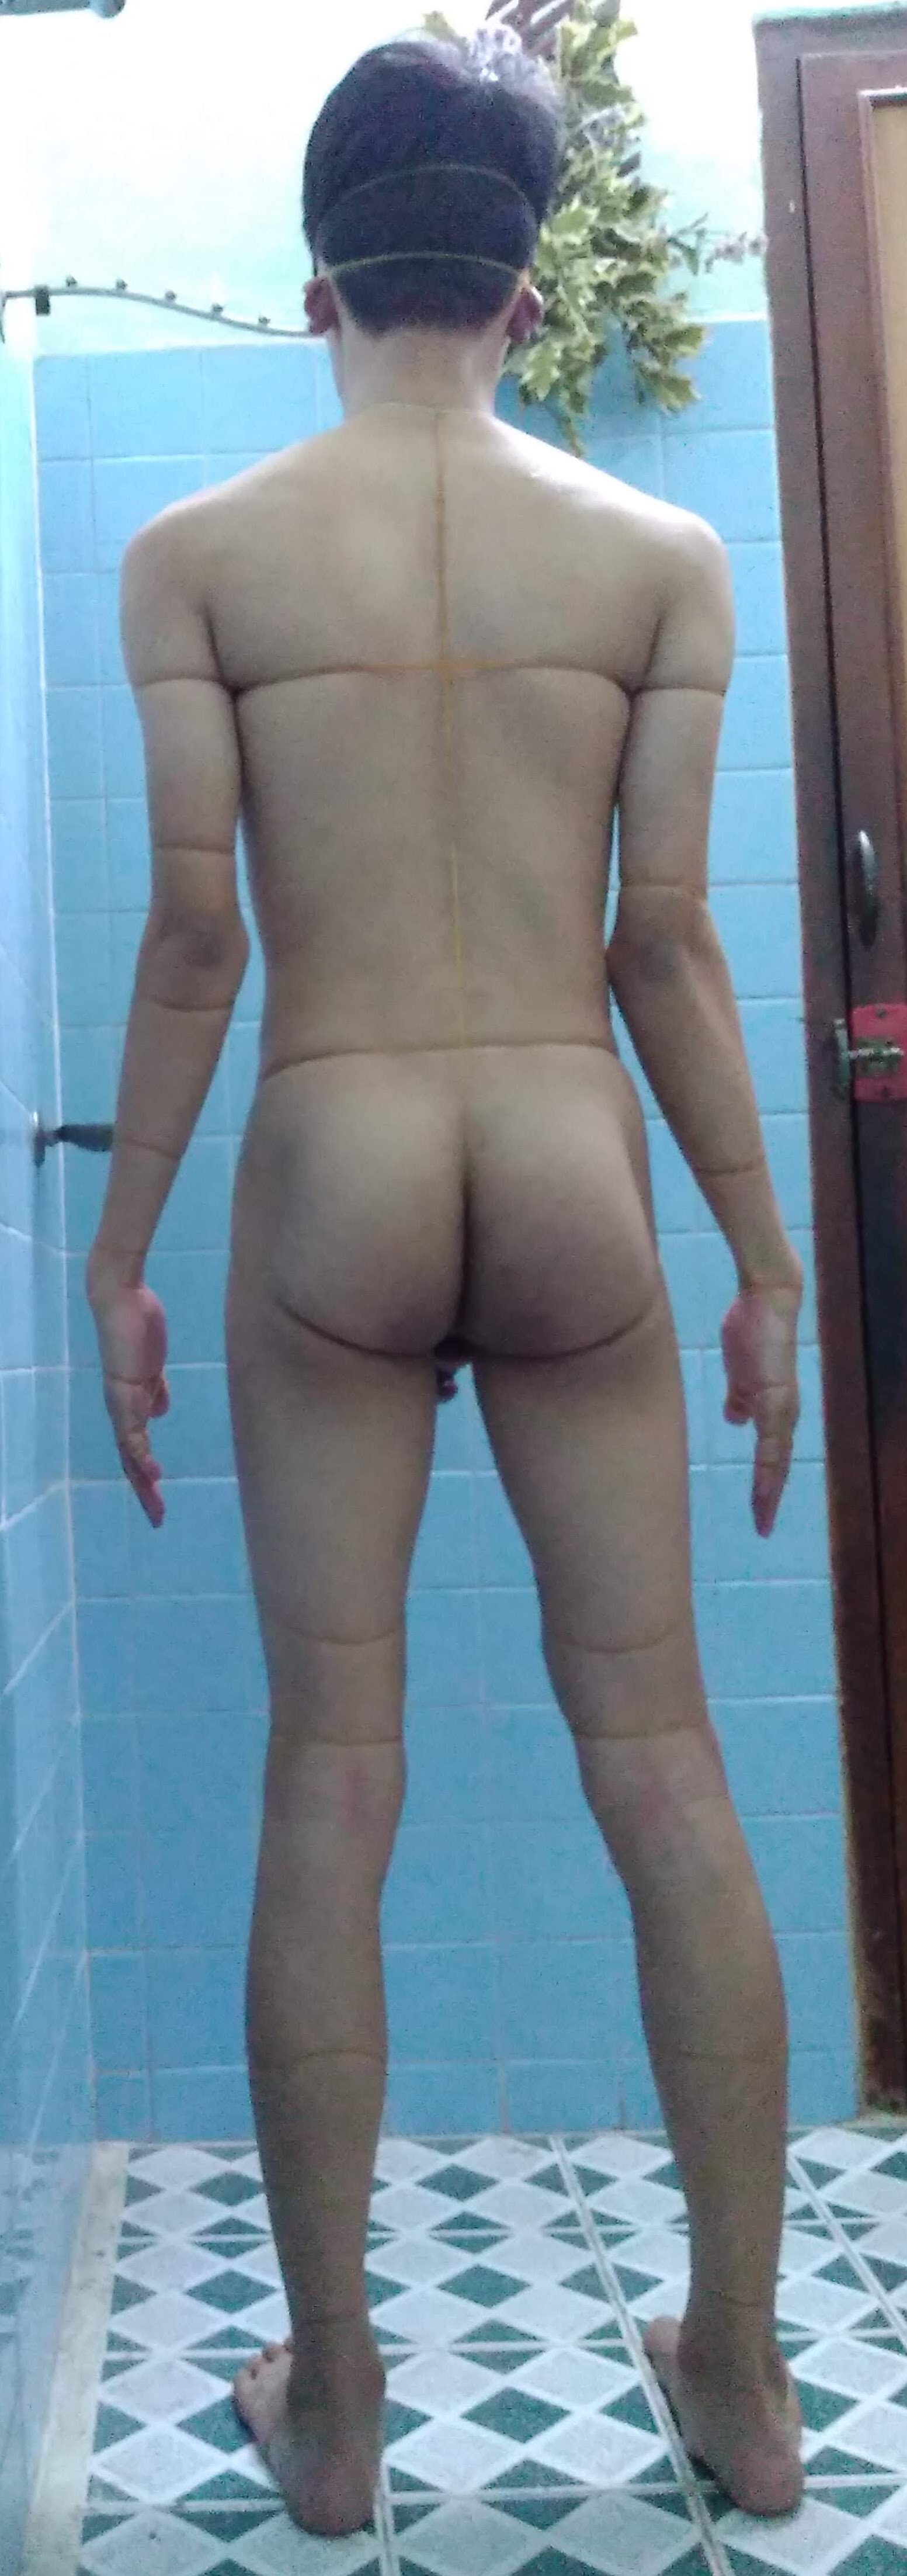 Nude puppet boy (2)